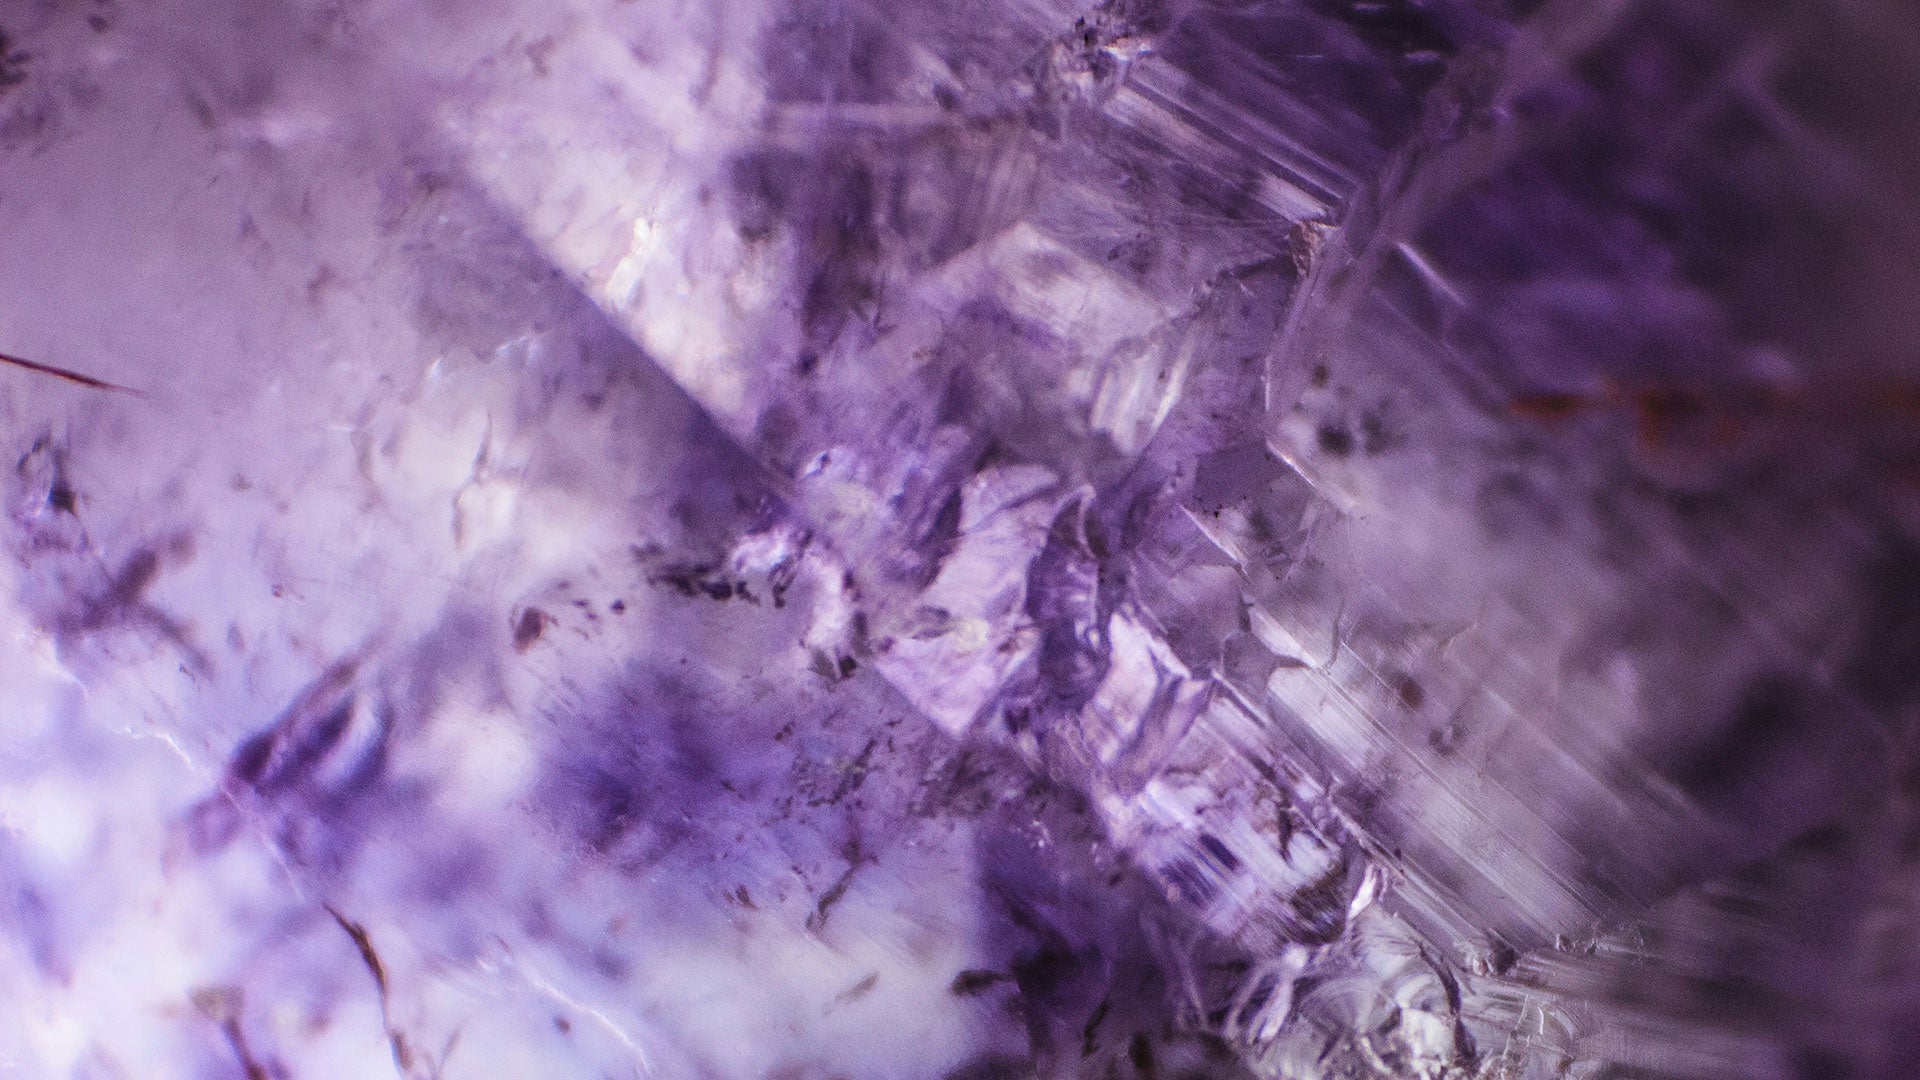 A close-up of an amethyst gemstone.